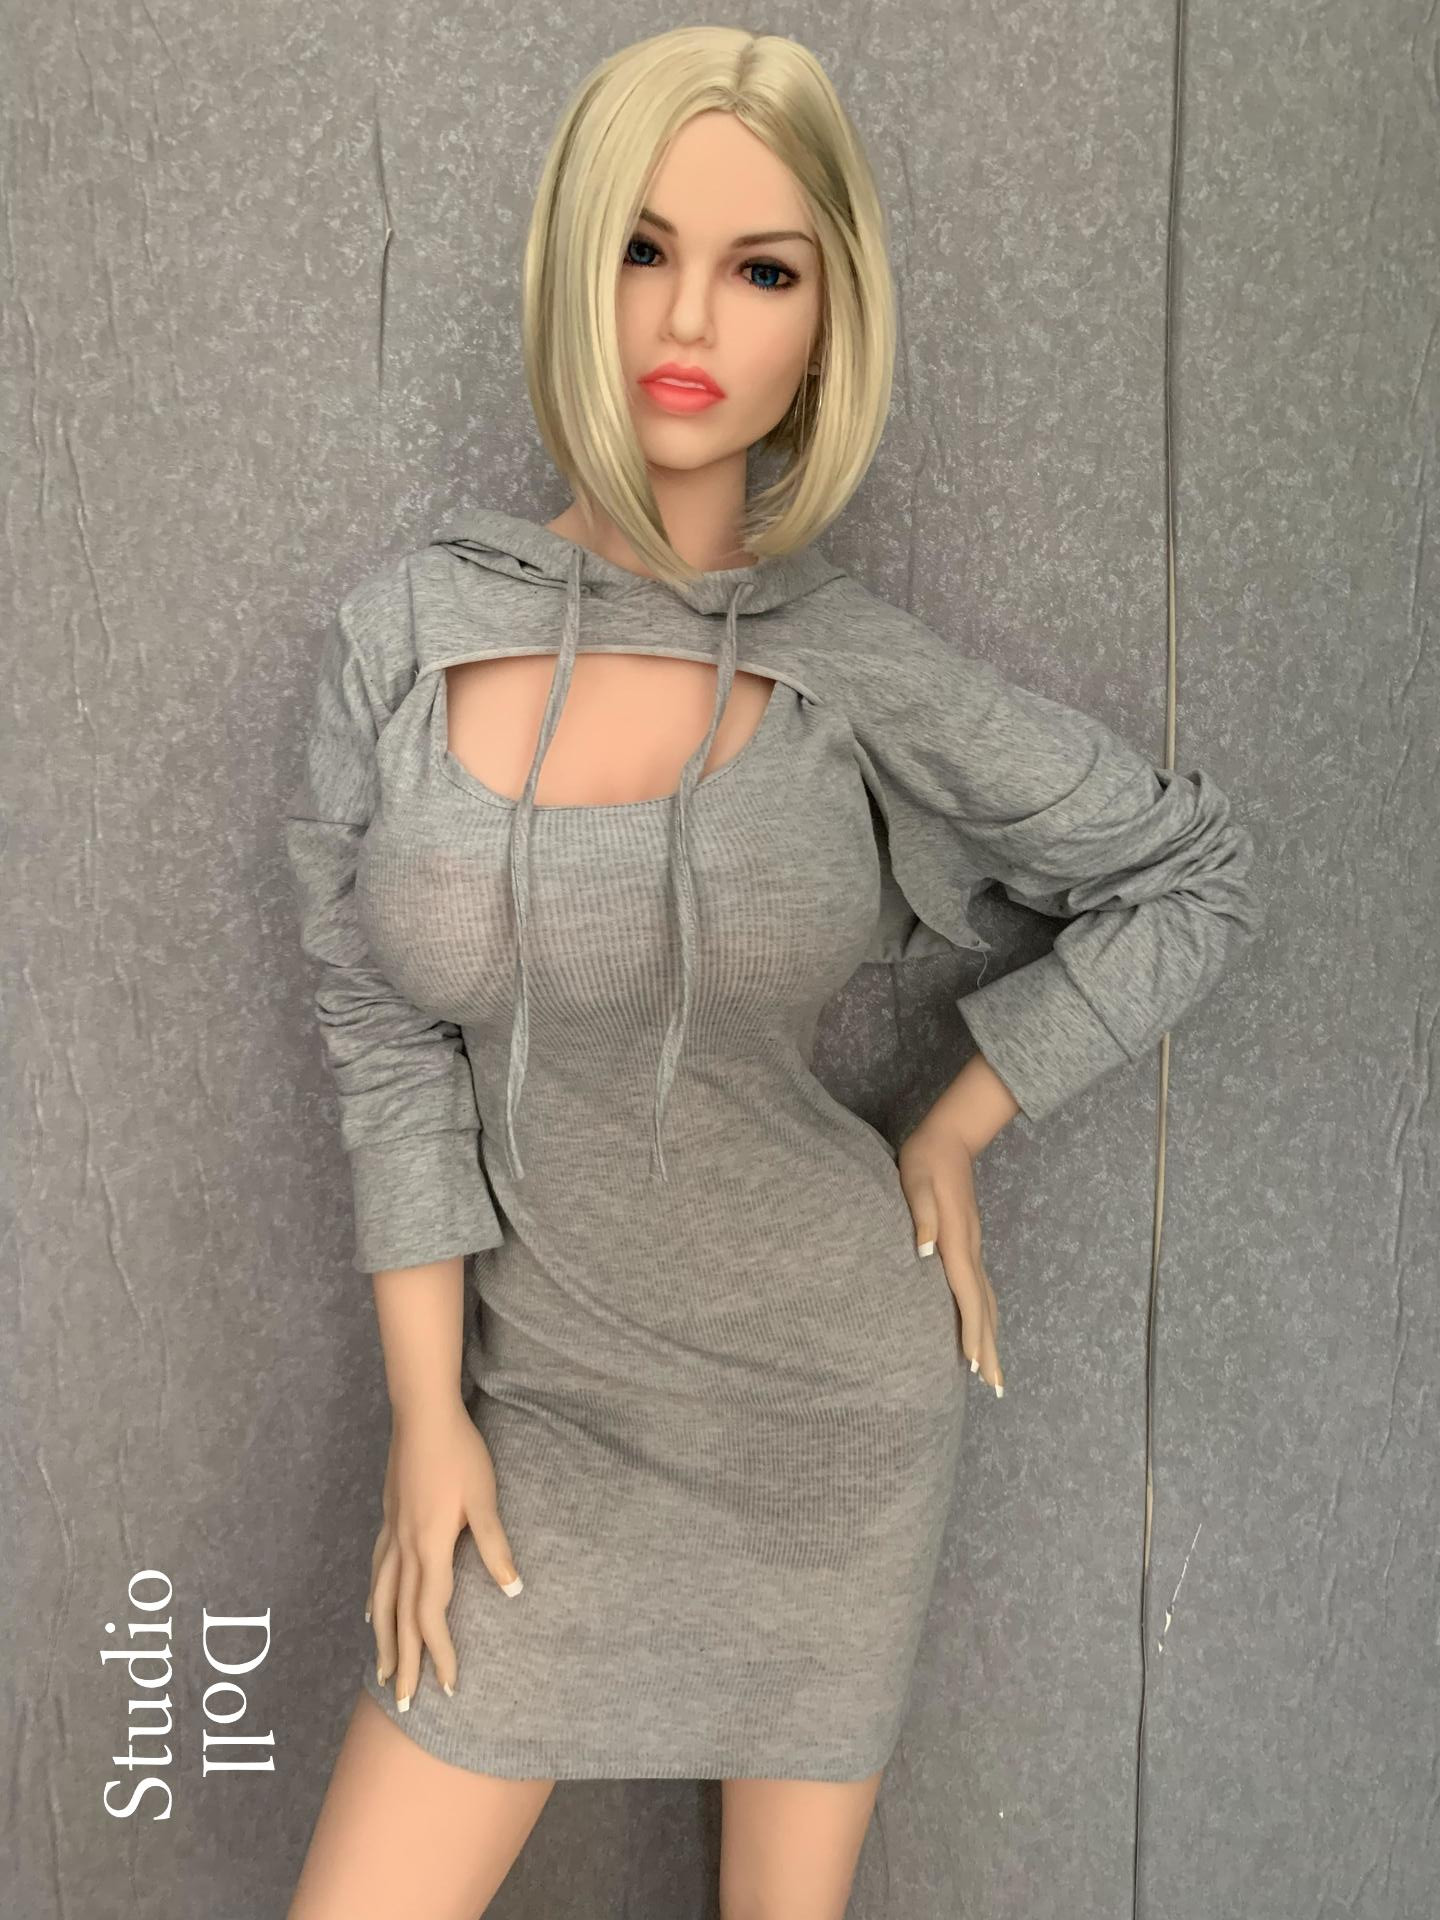 General 1440x1920 doll sweater dress blonde short hair Doll Studio